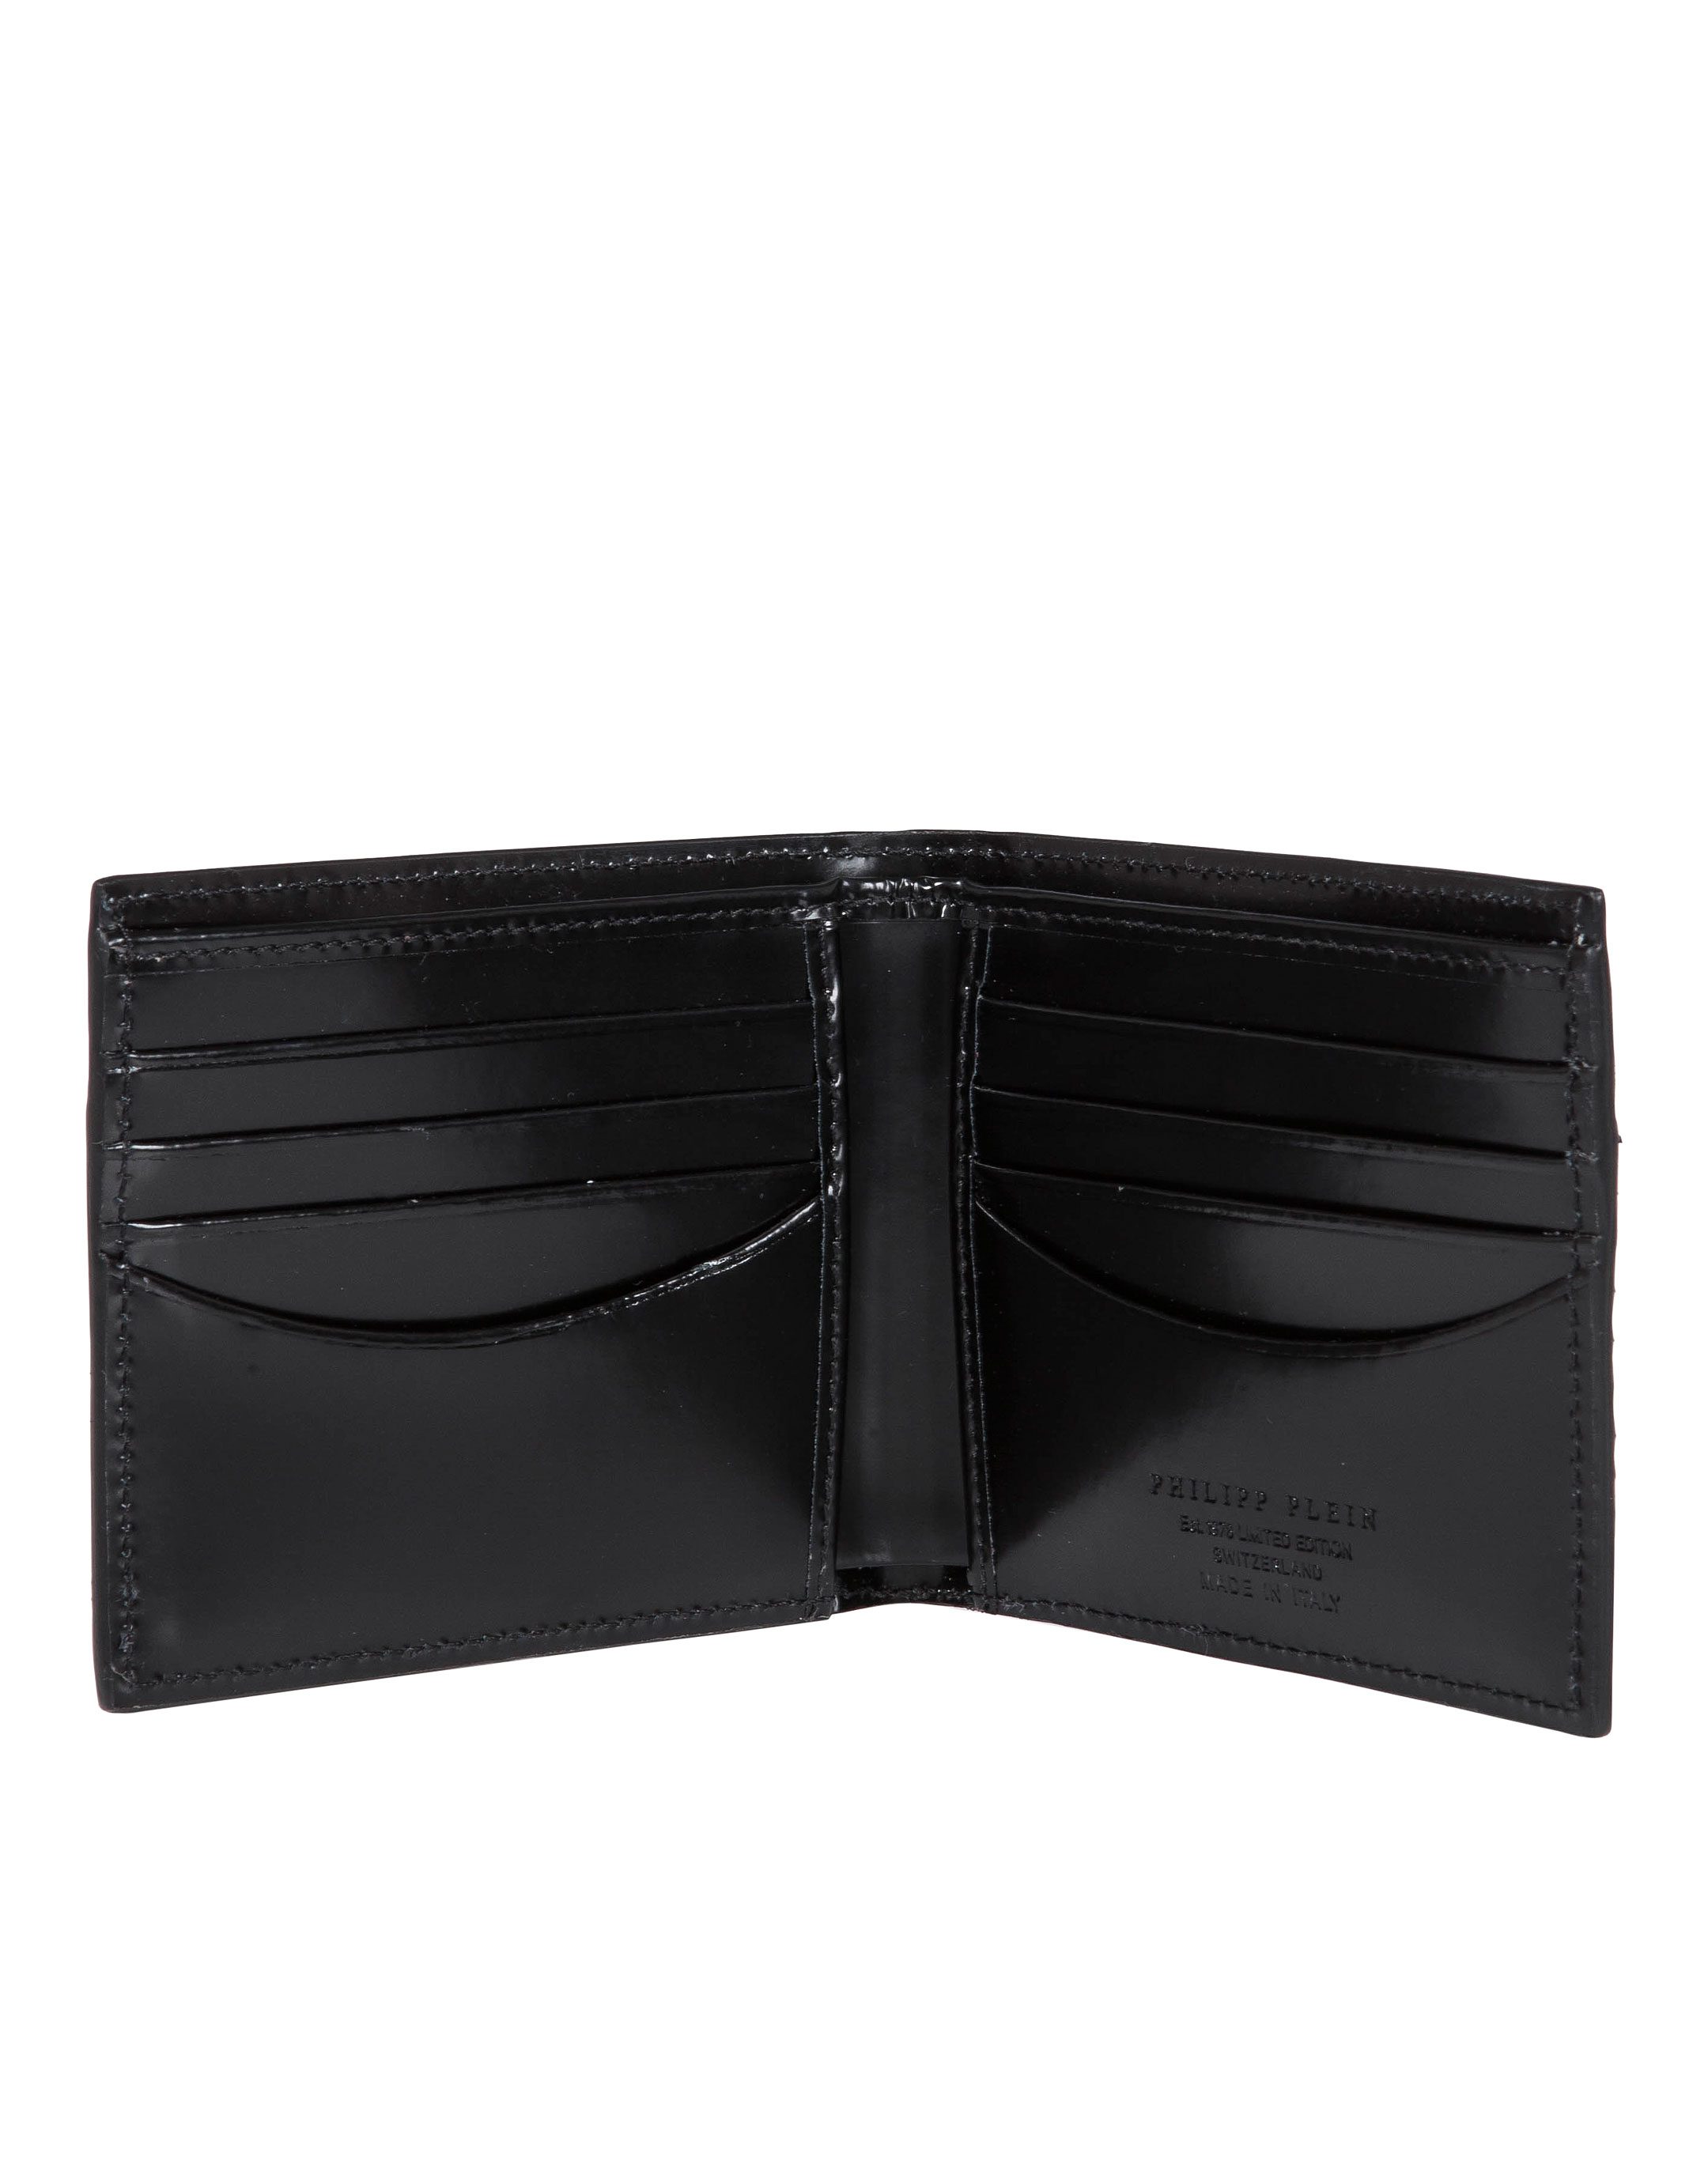 Pocket wallet "james" | Philipp Plein Outlet